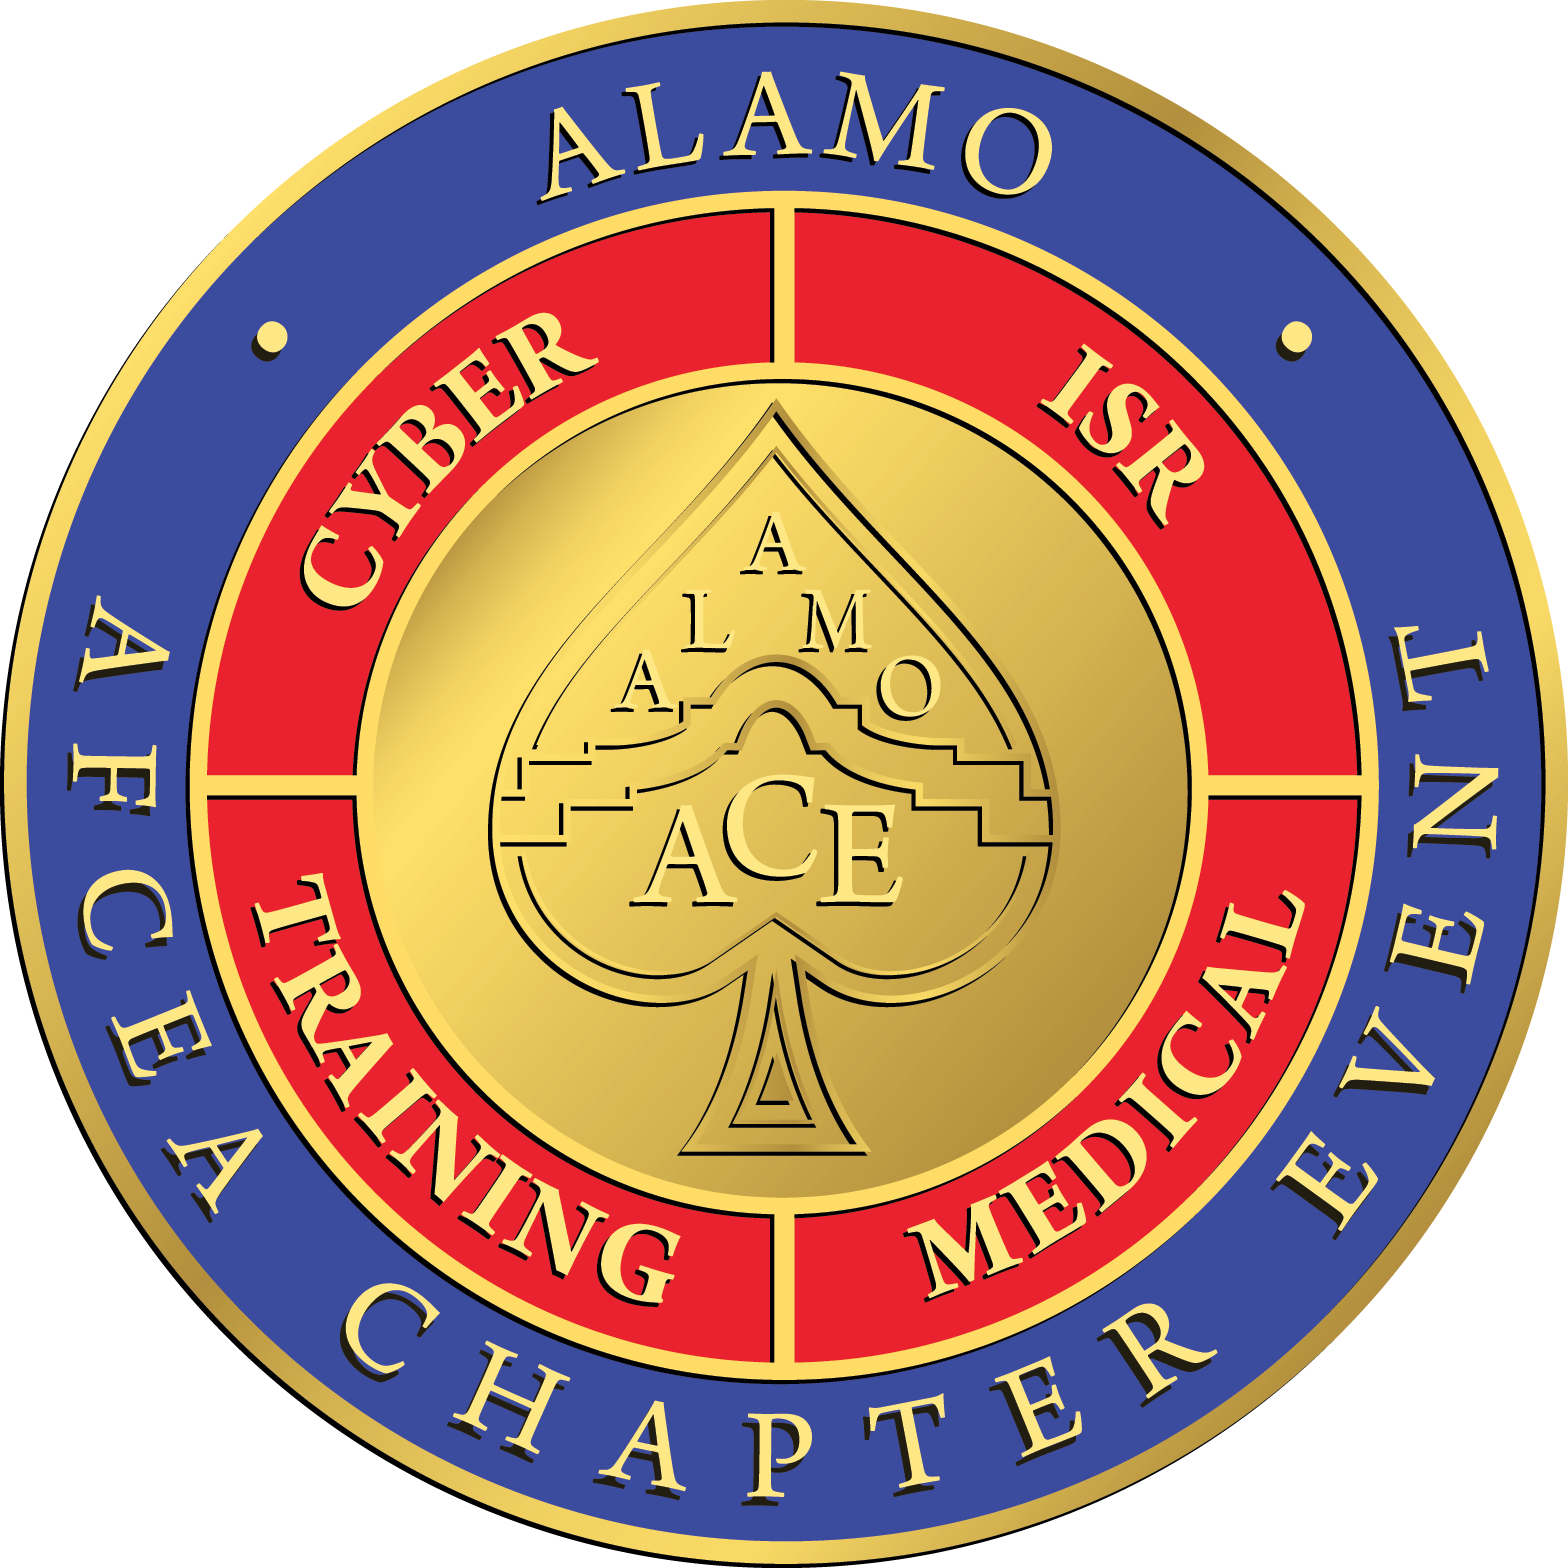 Alamo ACE logo